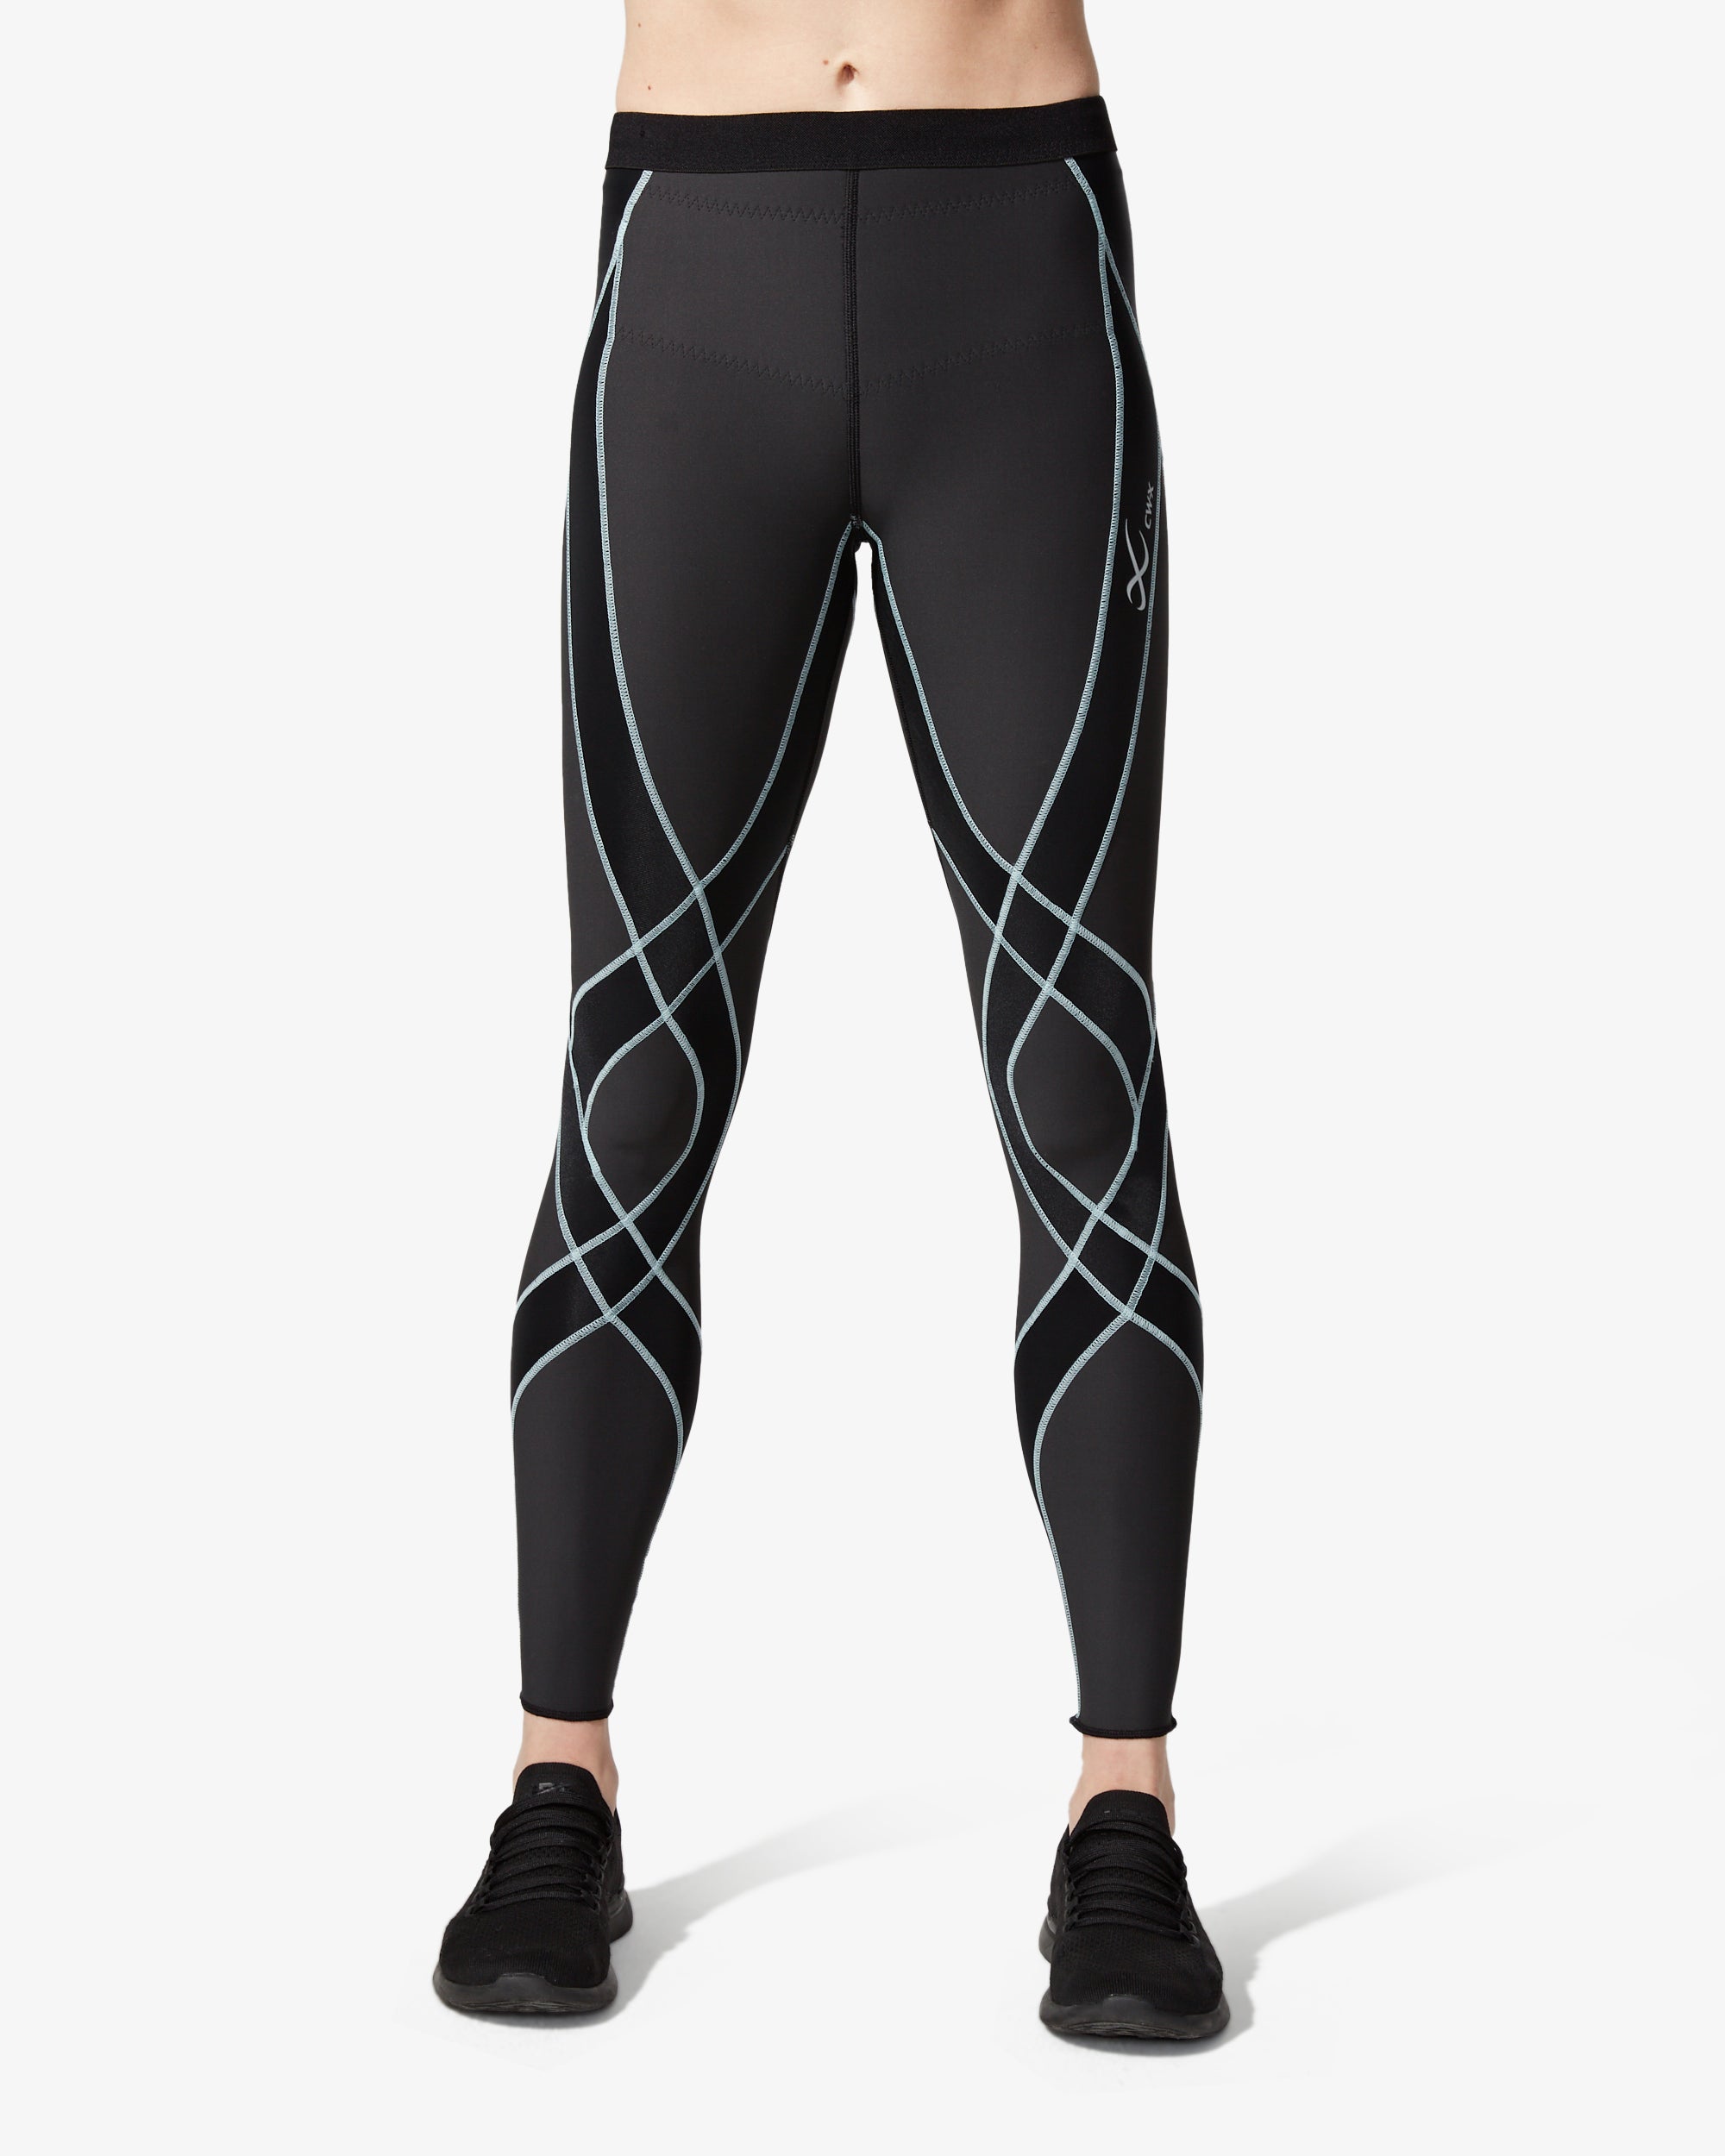 Copper Fit, Pants & Jumpsuits, Copper Fit Athletic Leggings Size M Black  White Gray Compression Gym Yoga New